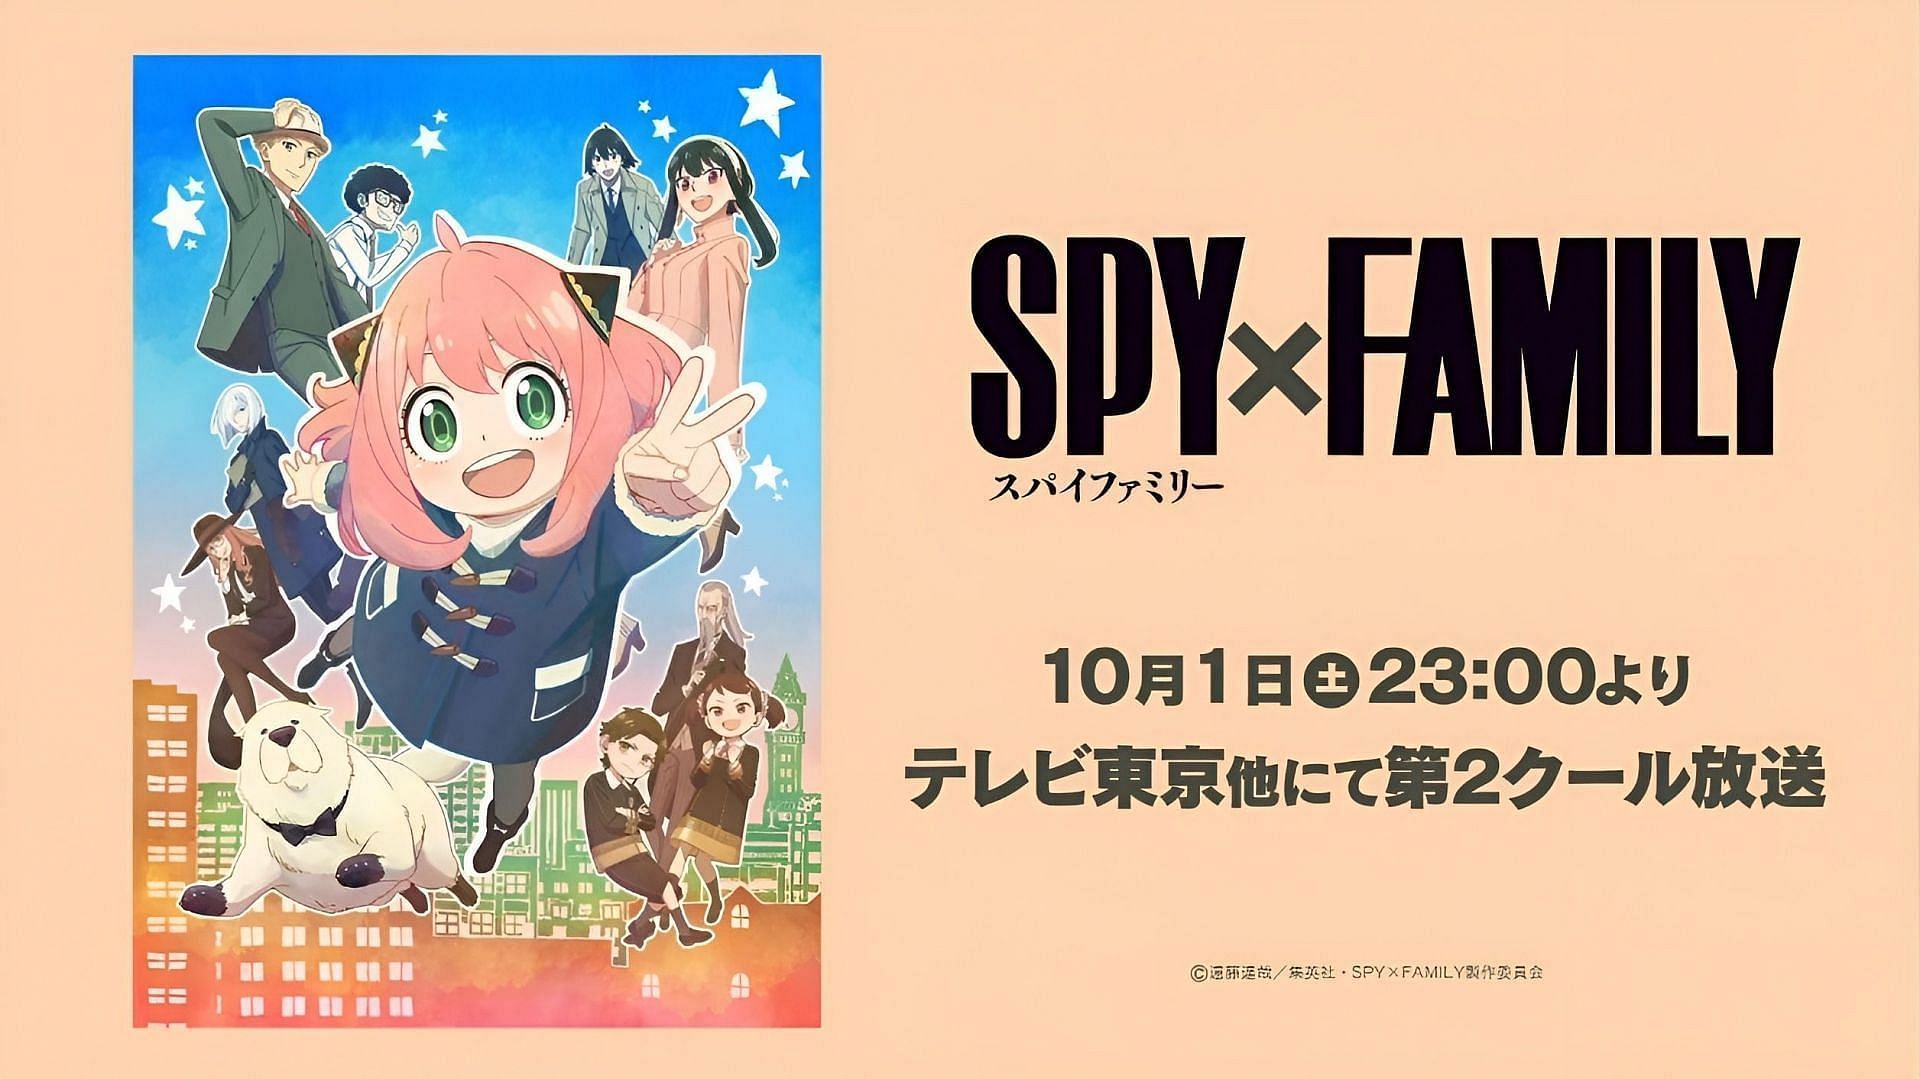 Spy X Family 2nd cour release date (Image via Toho Animation)